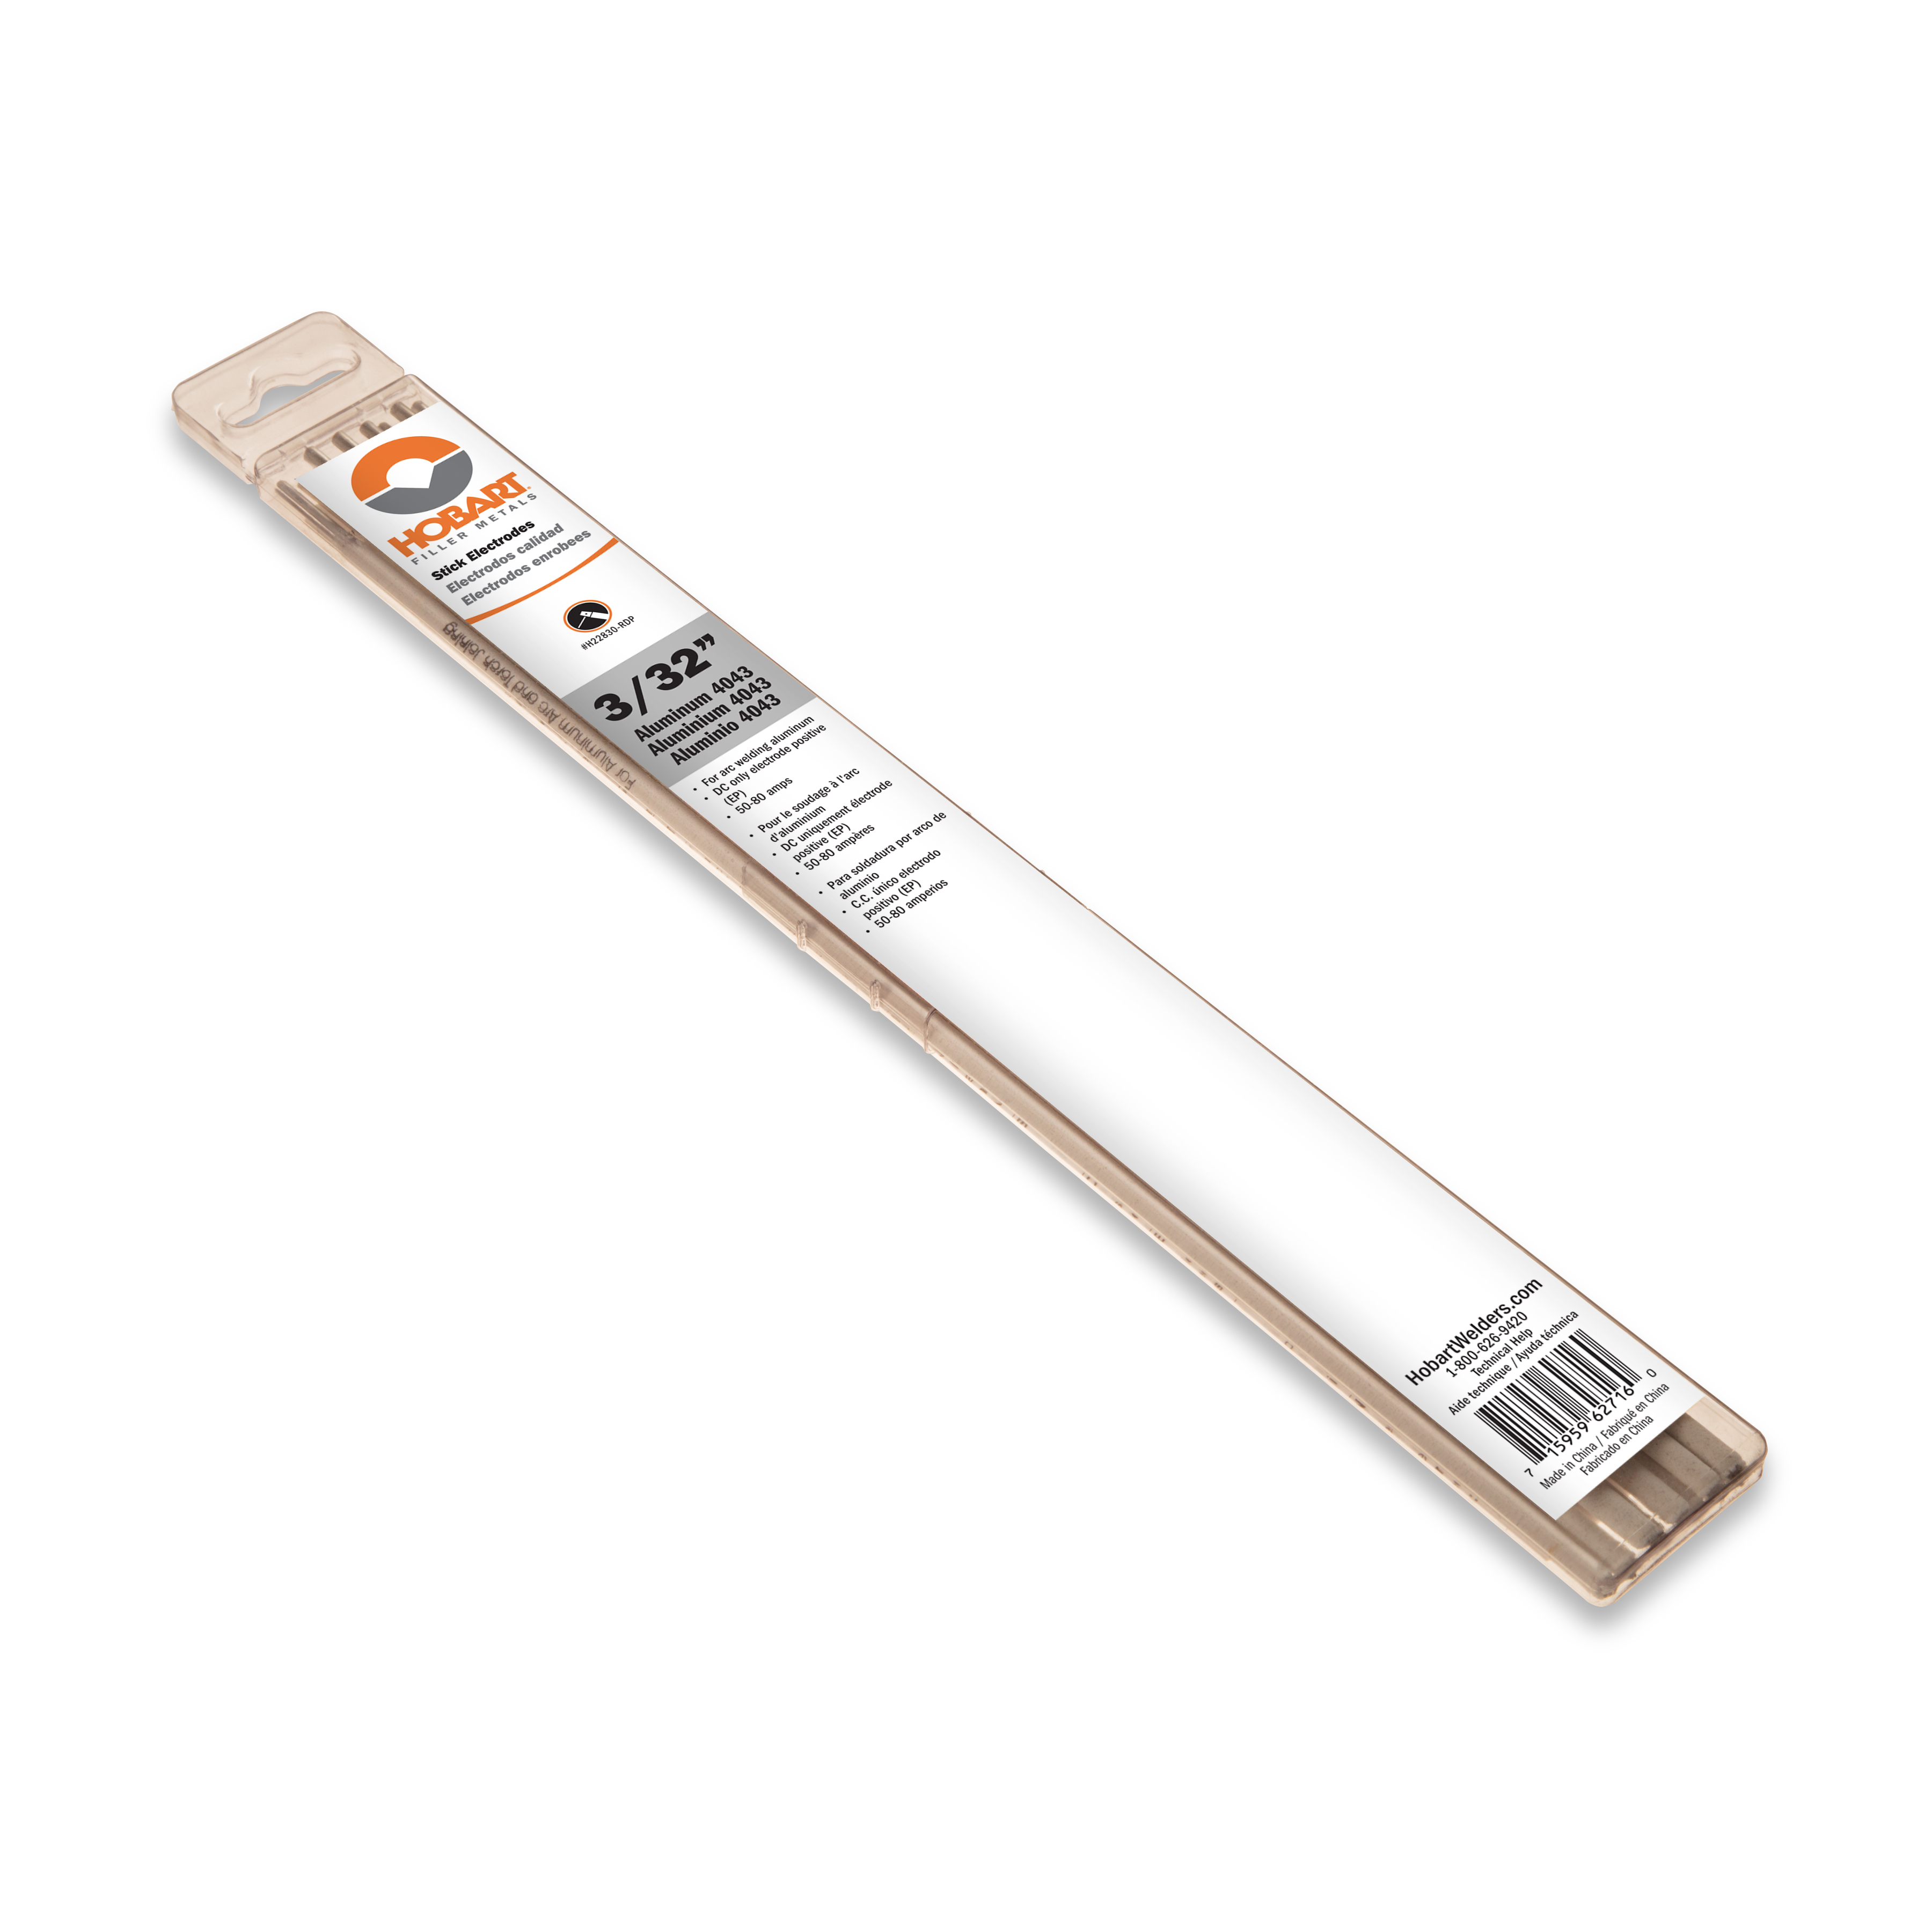 4043 1/8 in. aluminum stick electrode - qty. 10